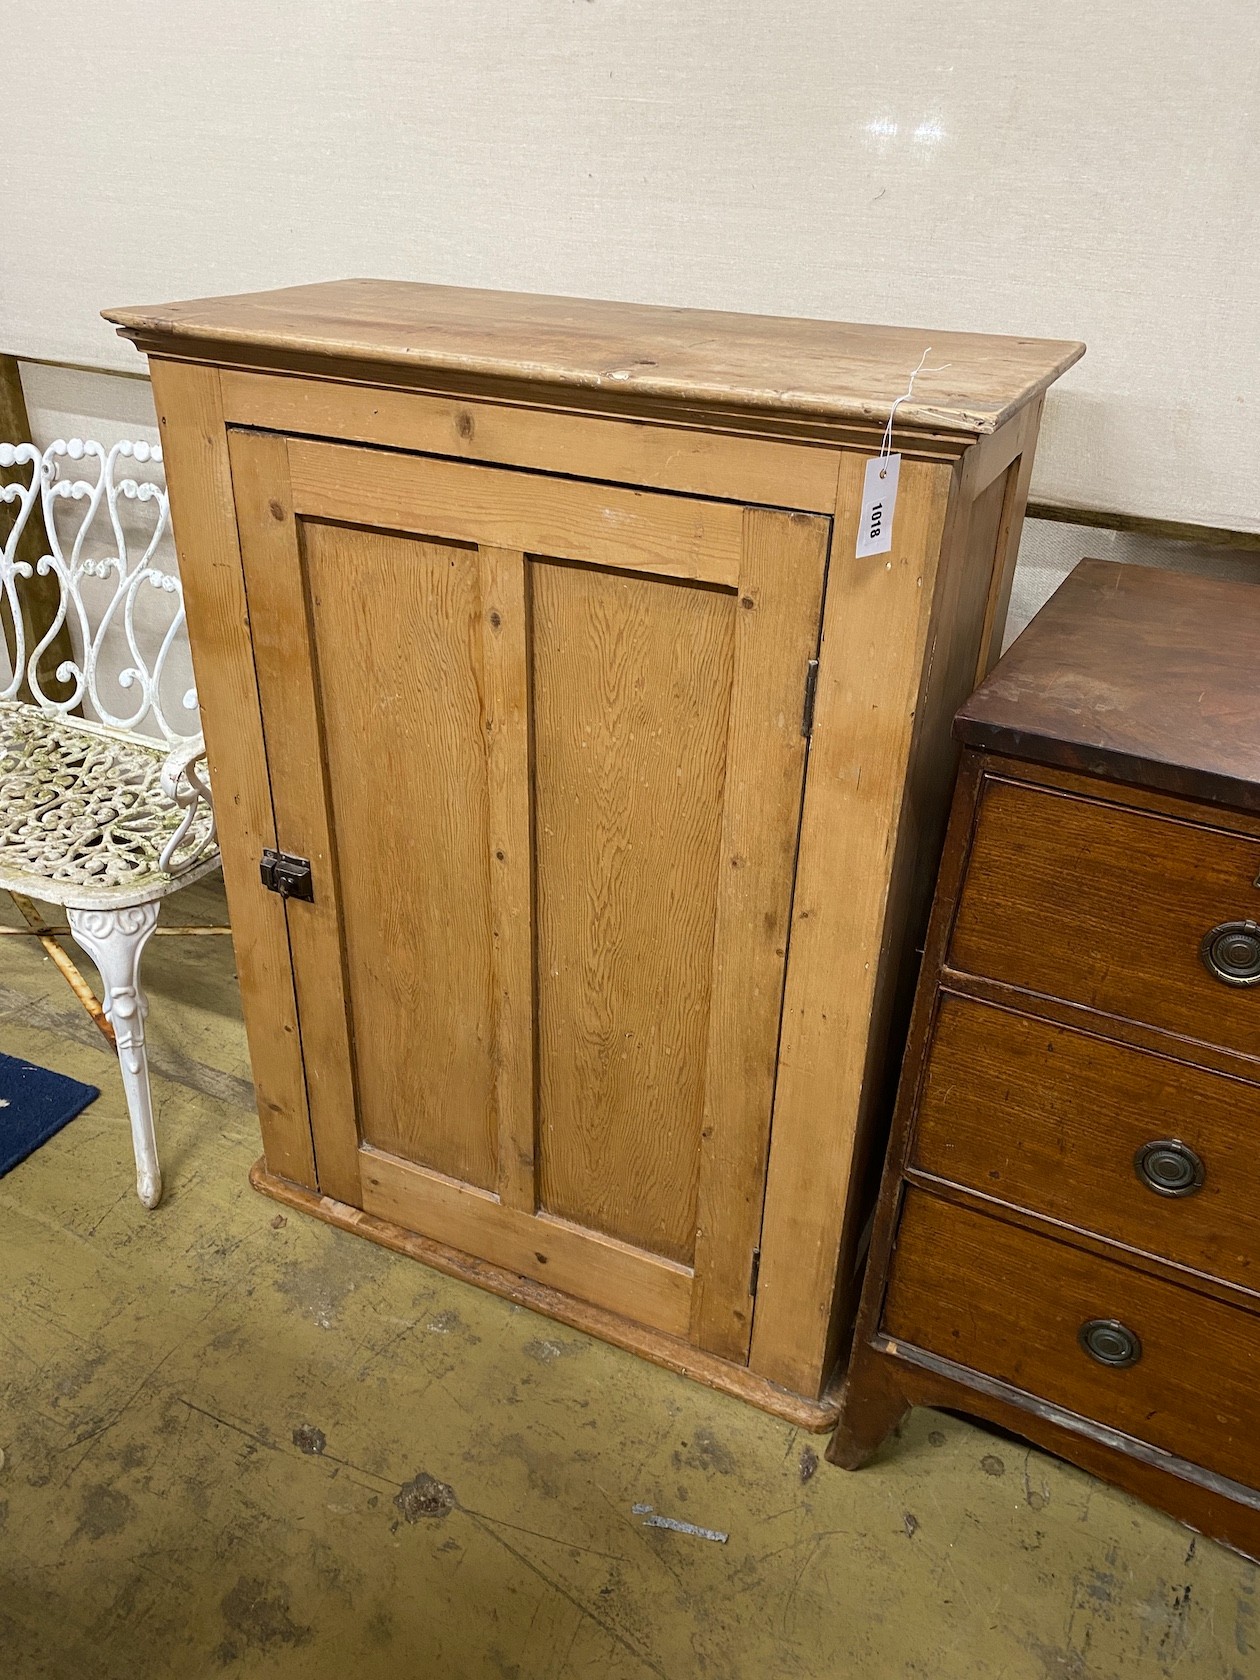 A 19th century pine single door kitchen cabinet width 82cm, depth 39cm, height 108cm.